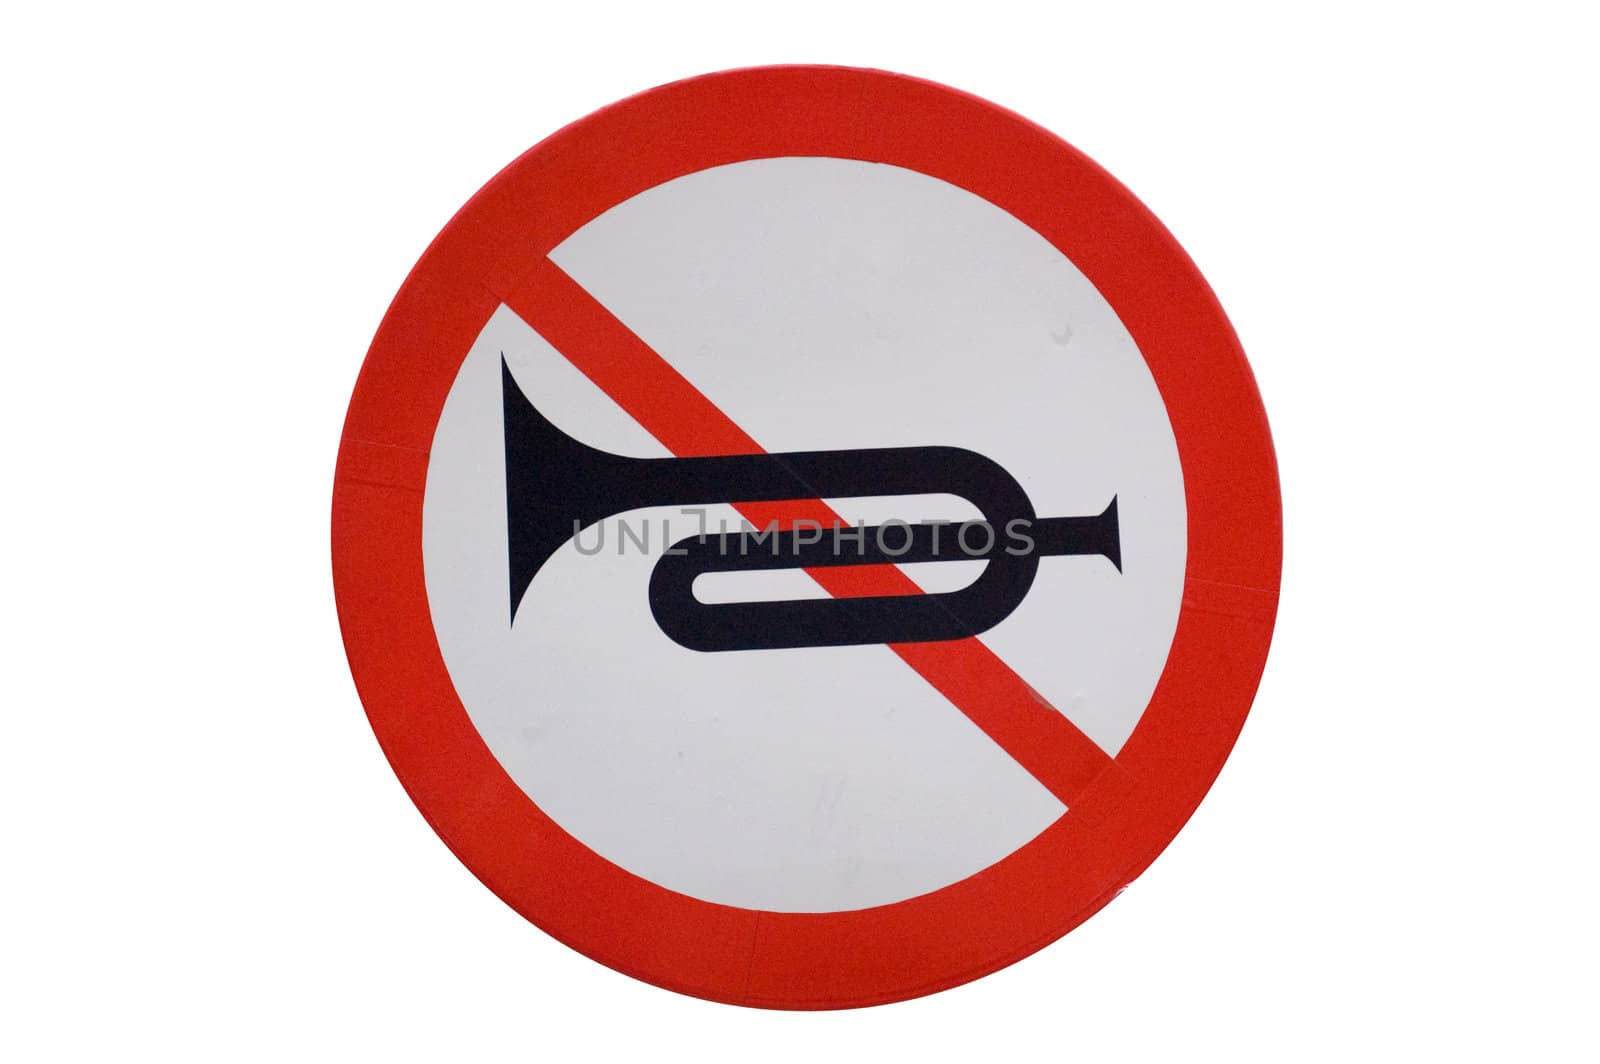 Sign forbidding trumpet